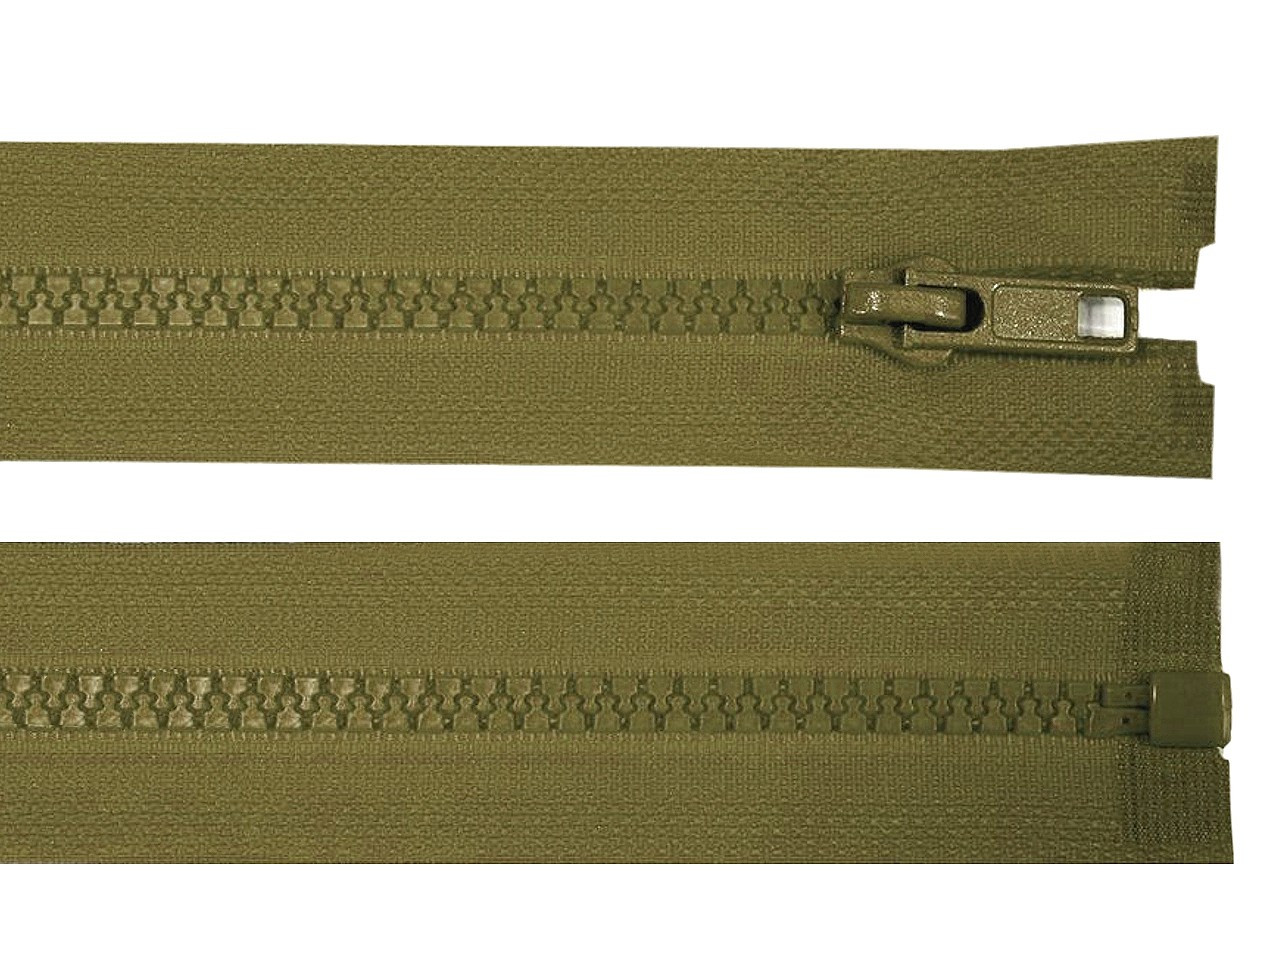 Kostěný zip No 5 délka 80 cm bundový, barva 298 zelená khaki tmavá